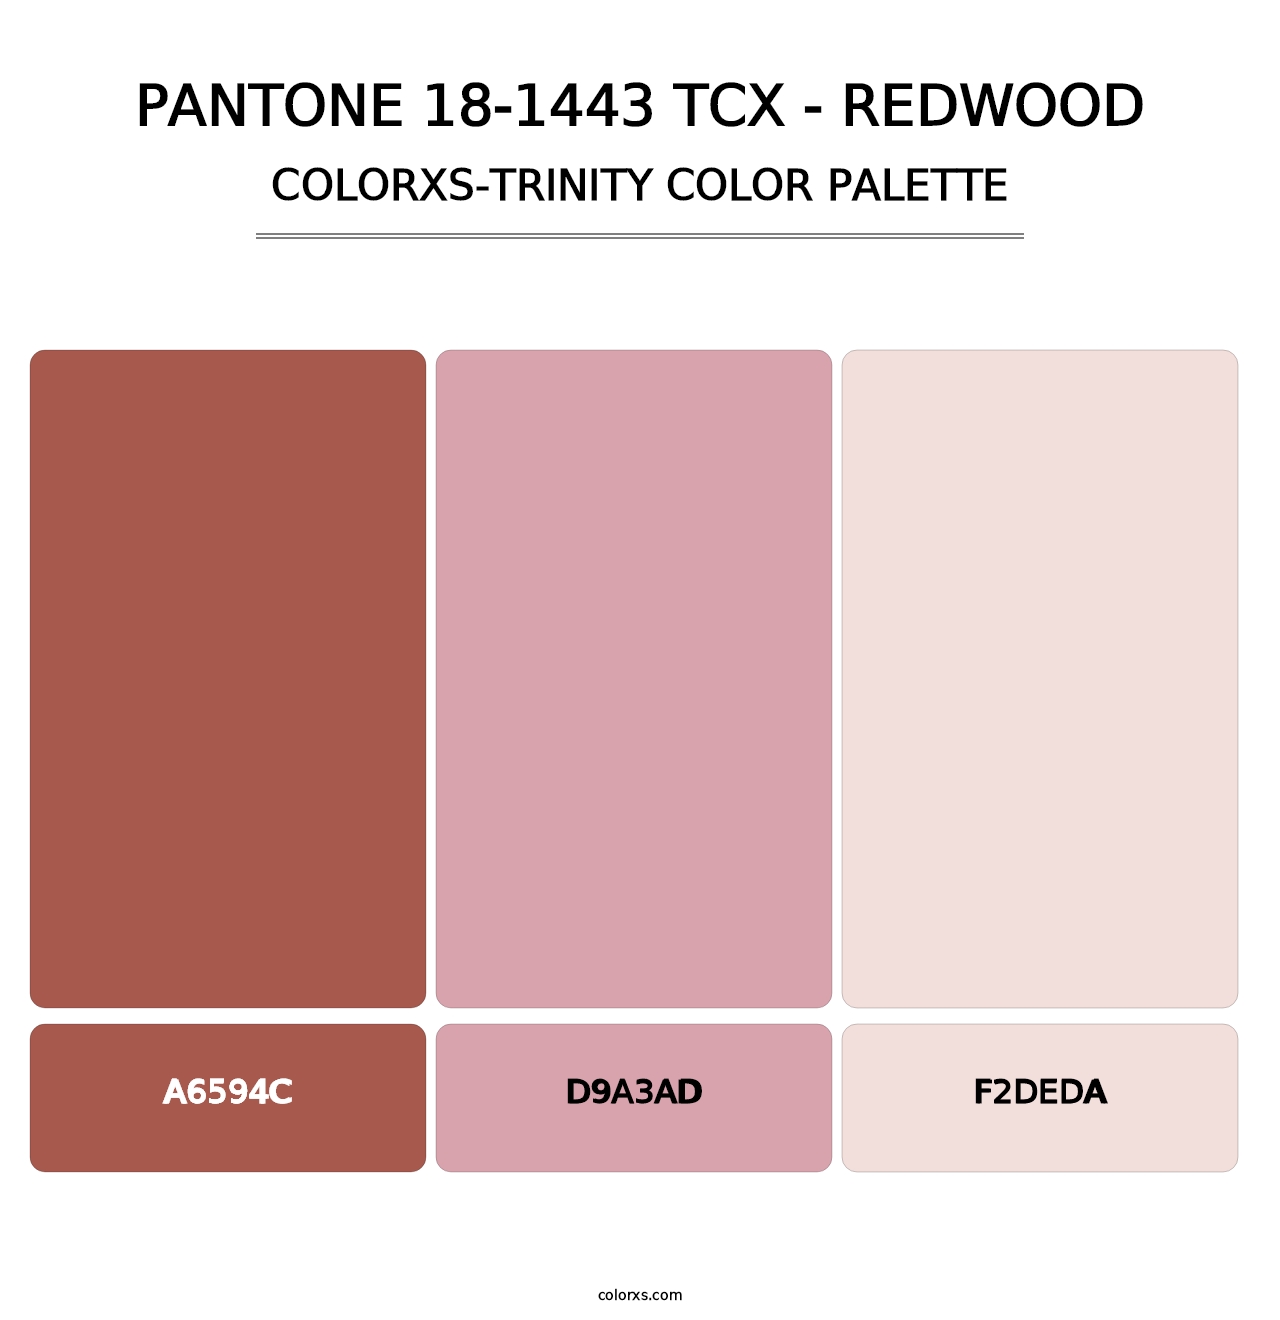 PANTONE 18-1443 TCX - Redwood - Colorxs Trinity Palette